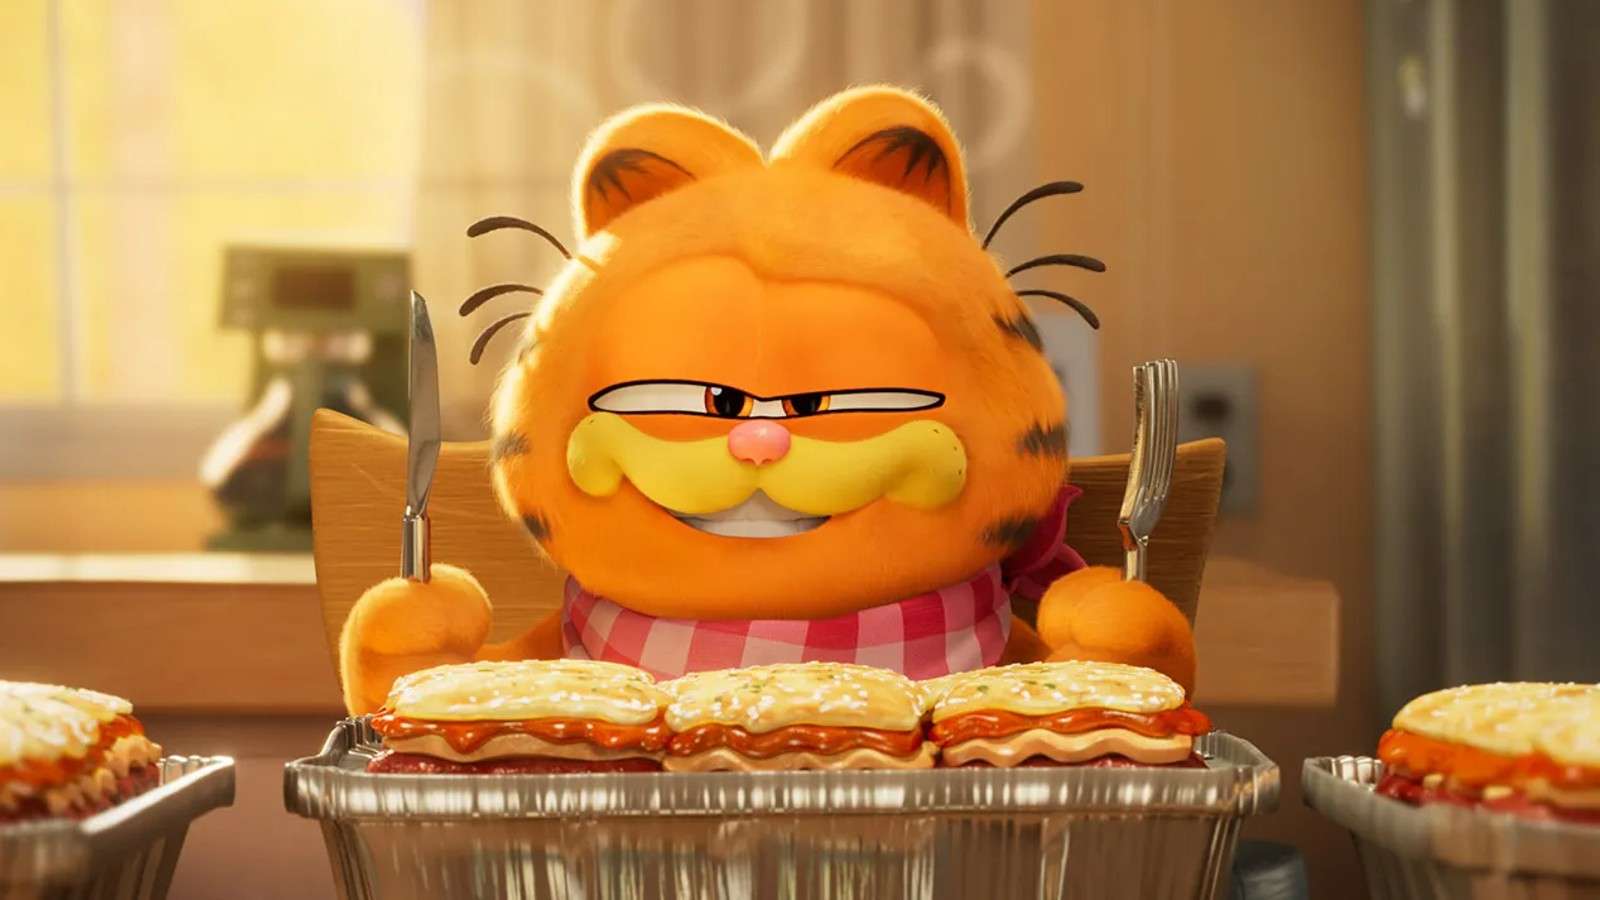 Garfield eating lasagna in the new Garfield movie.